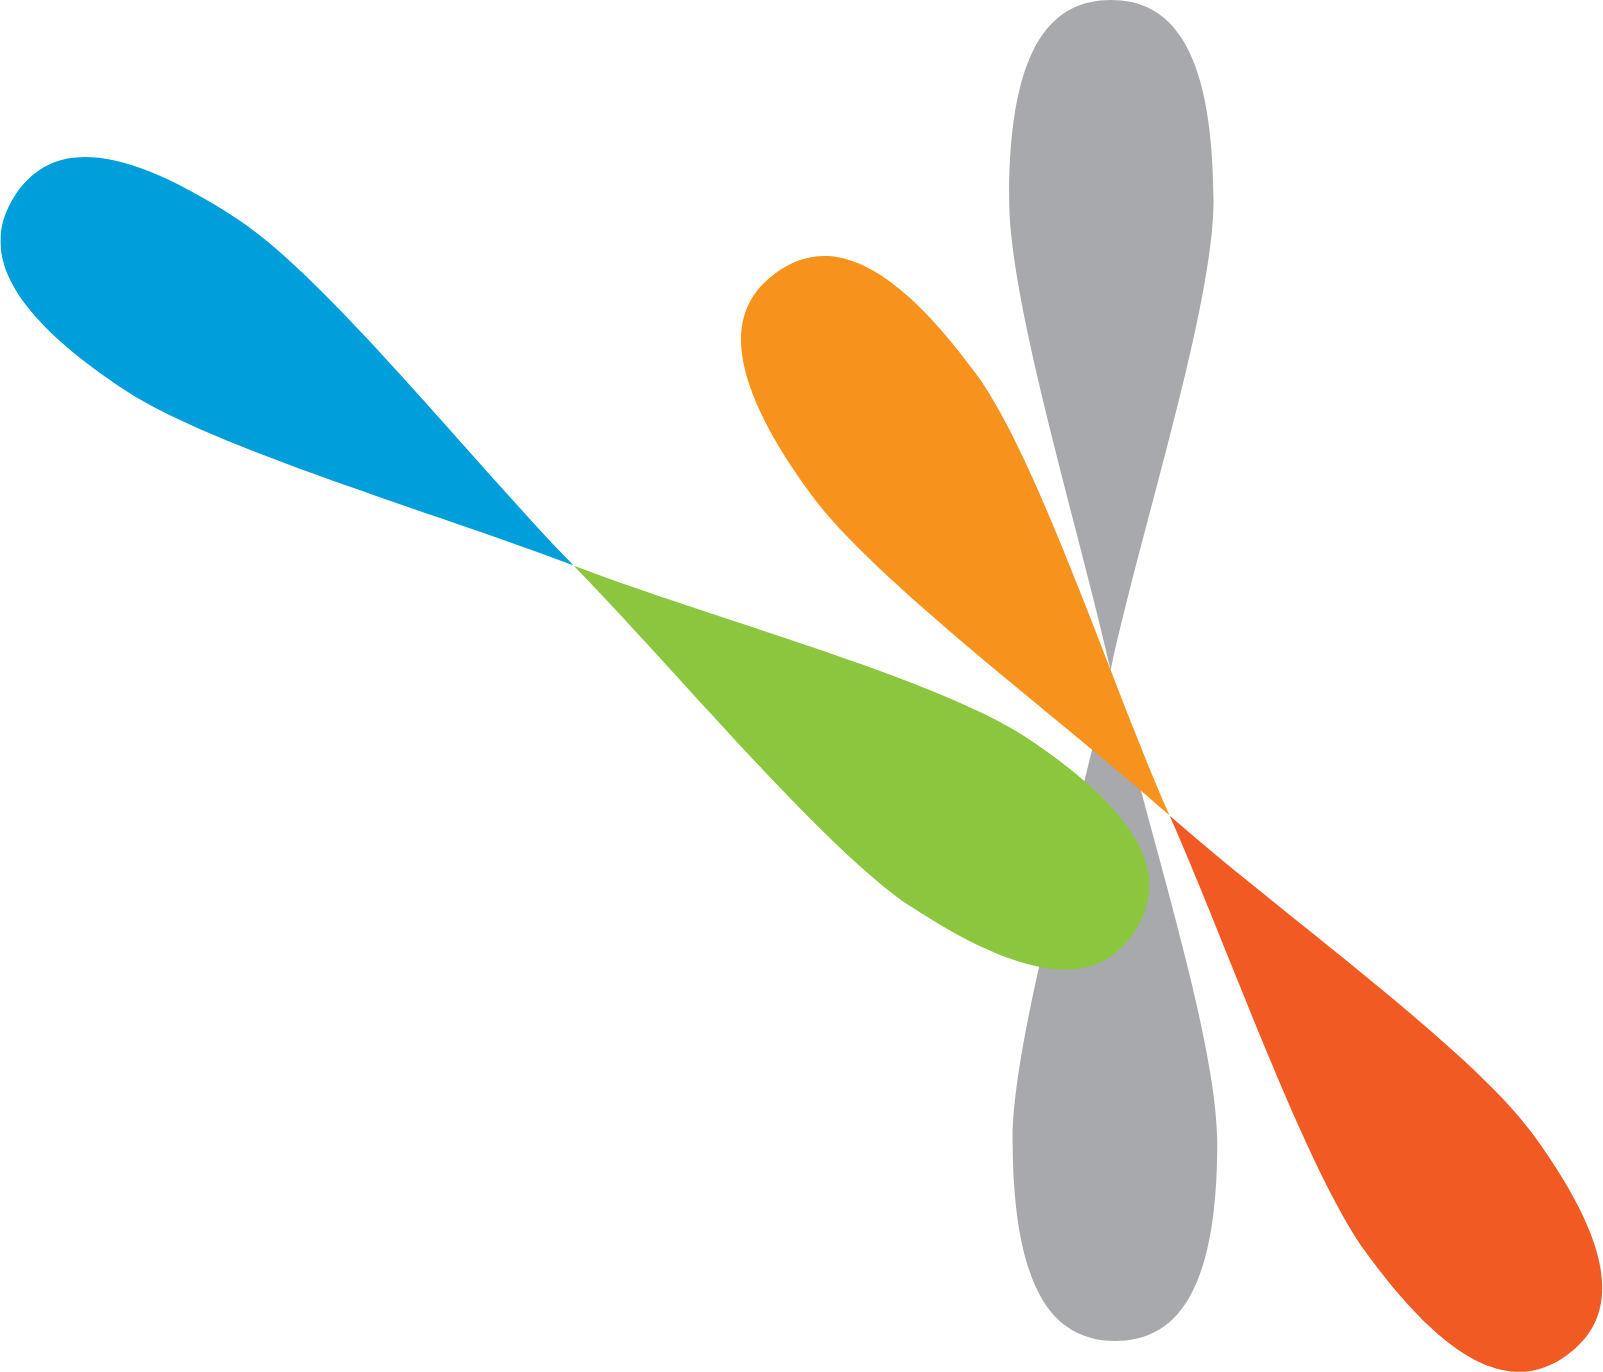 KT&G (Korea Tobacco) logo in transparent PNG and vectorized SVG formats